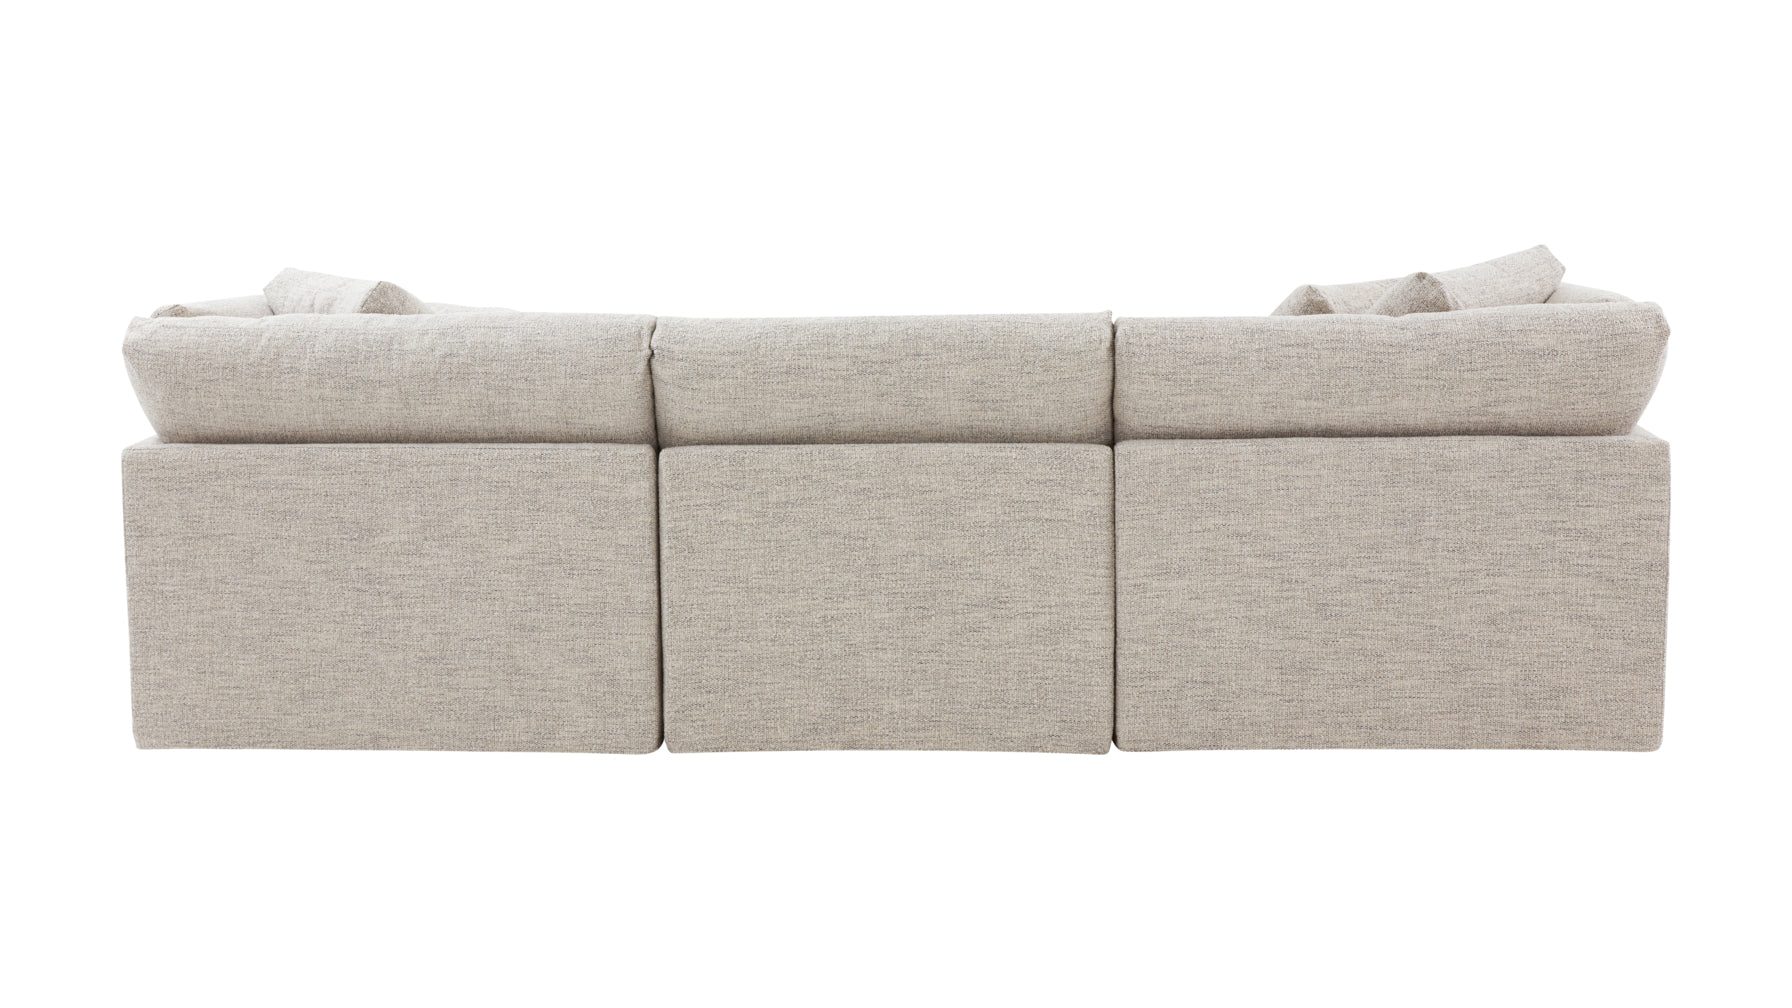 Get Together™ 3-Piece Modular Sofa, Large, Oatmeal - Image 9